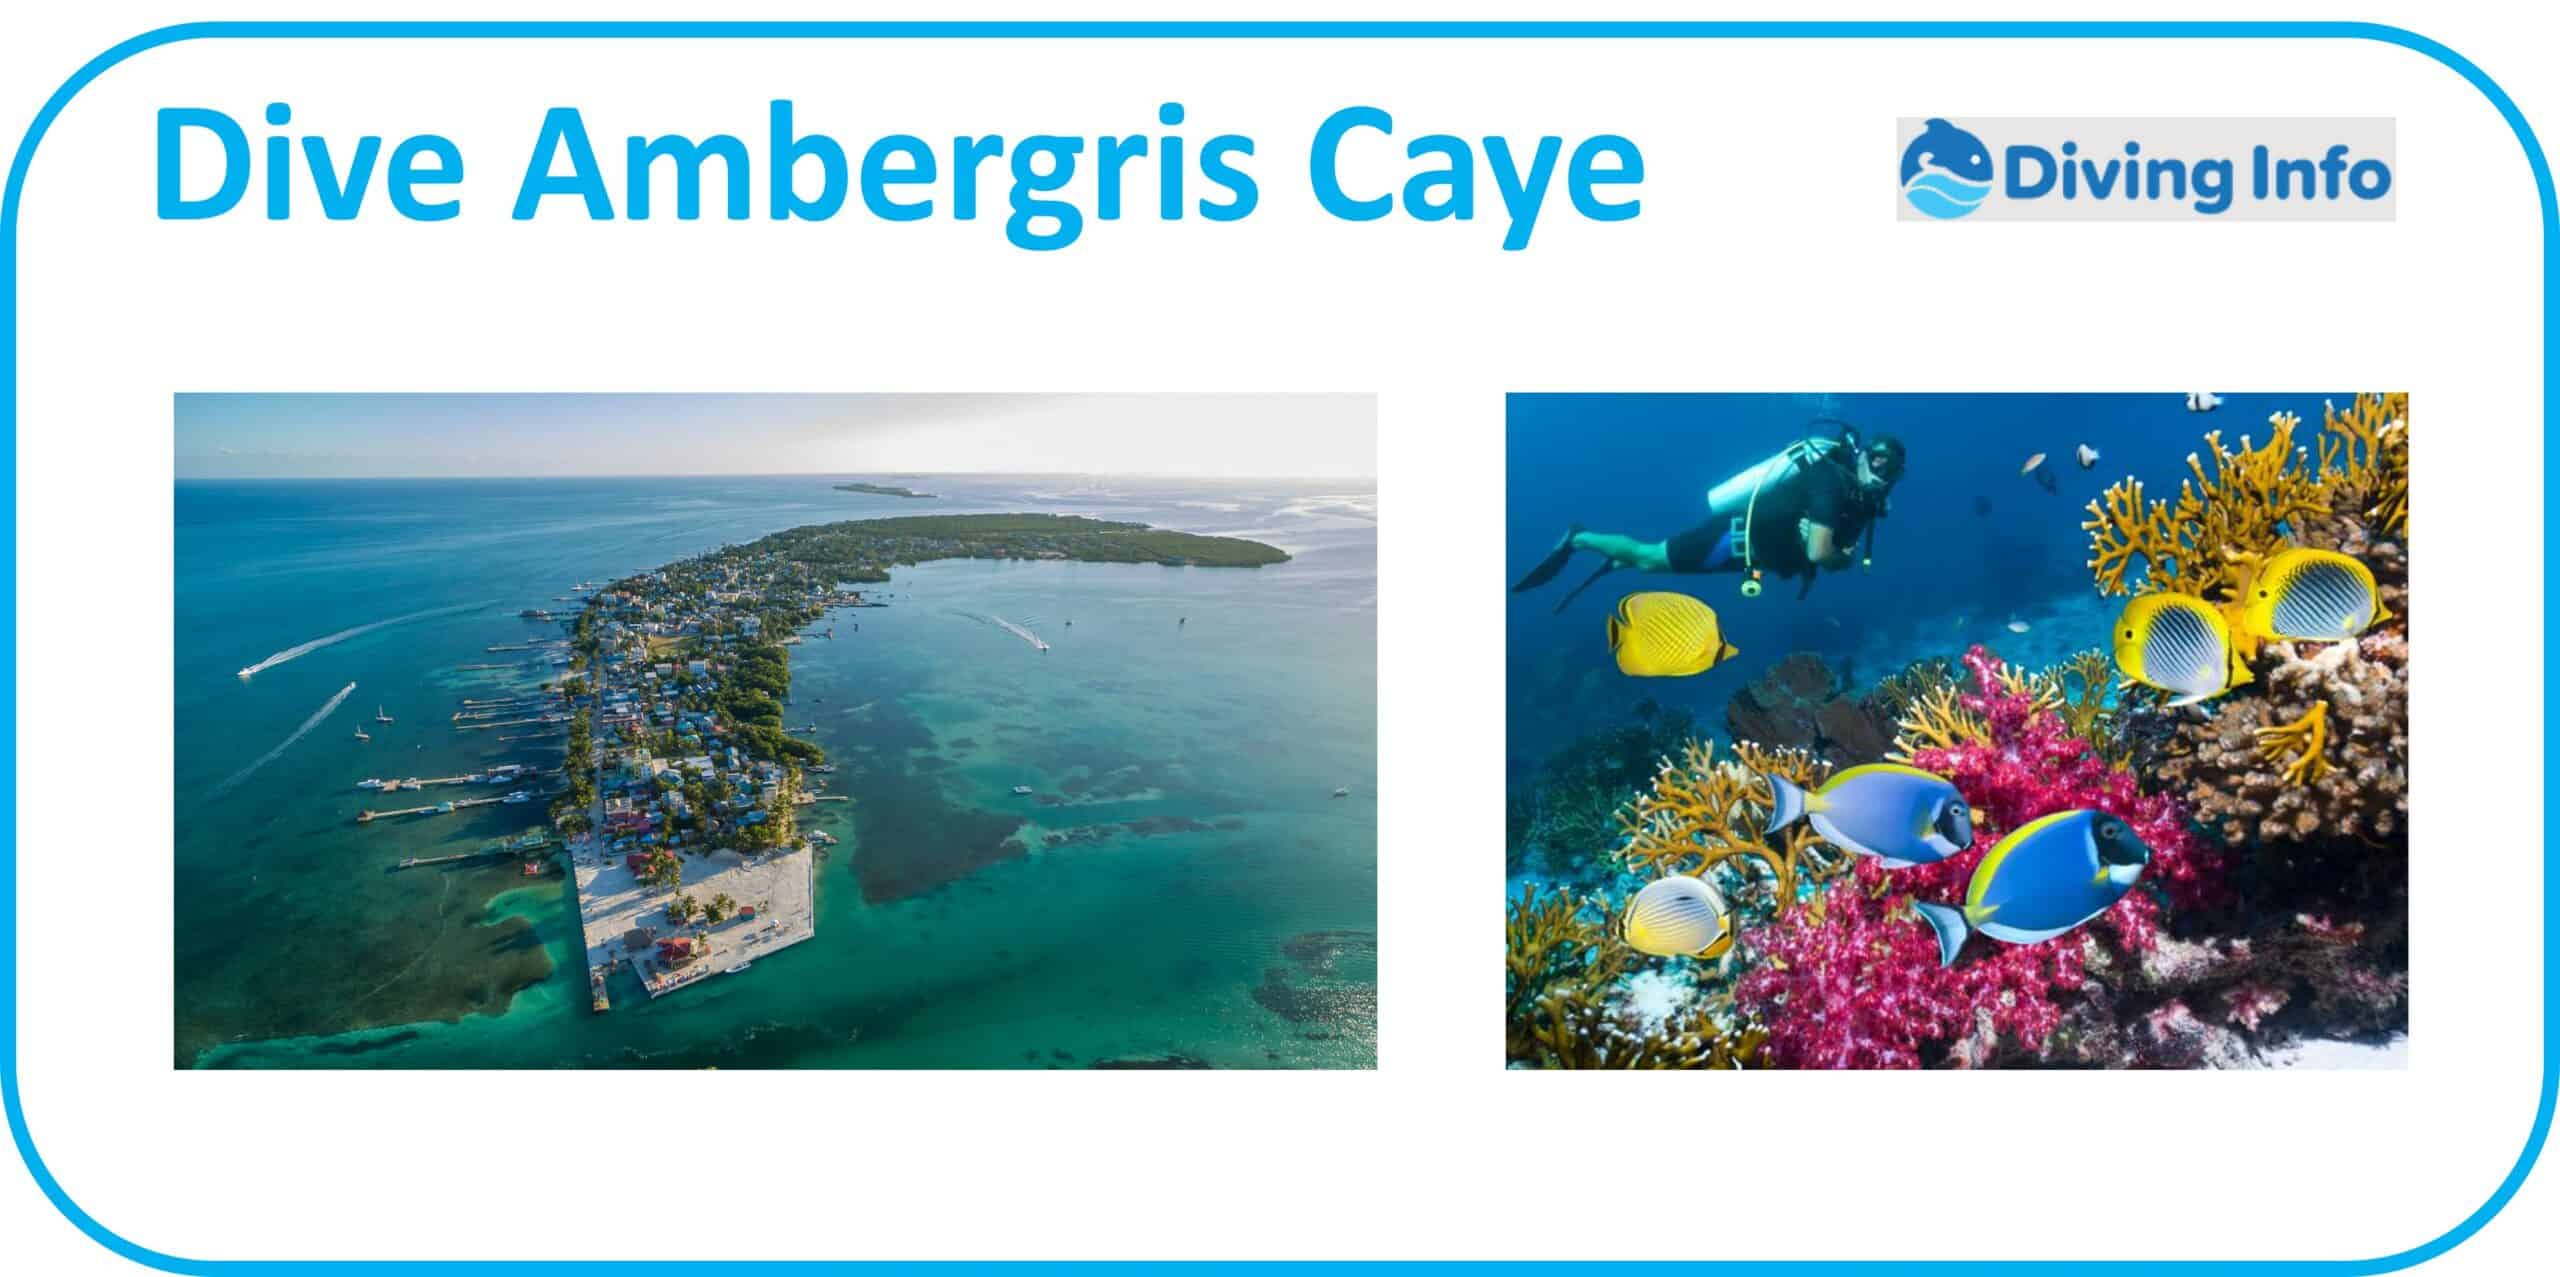 Dive Ambergris Caye